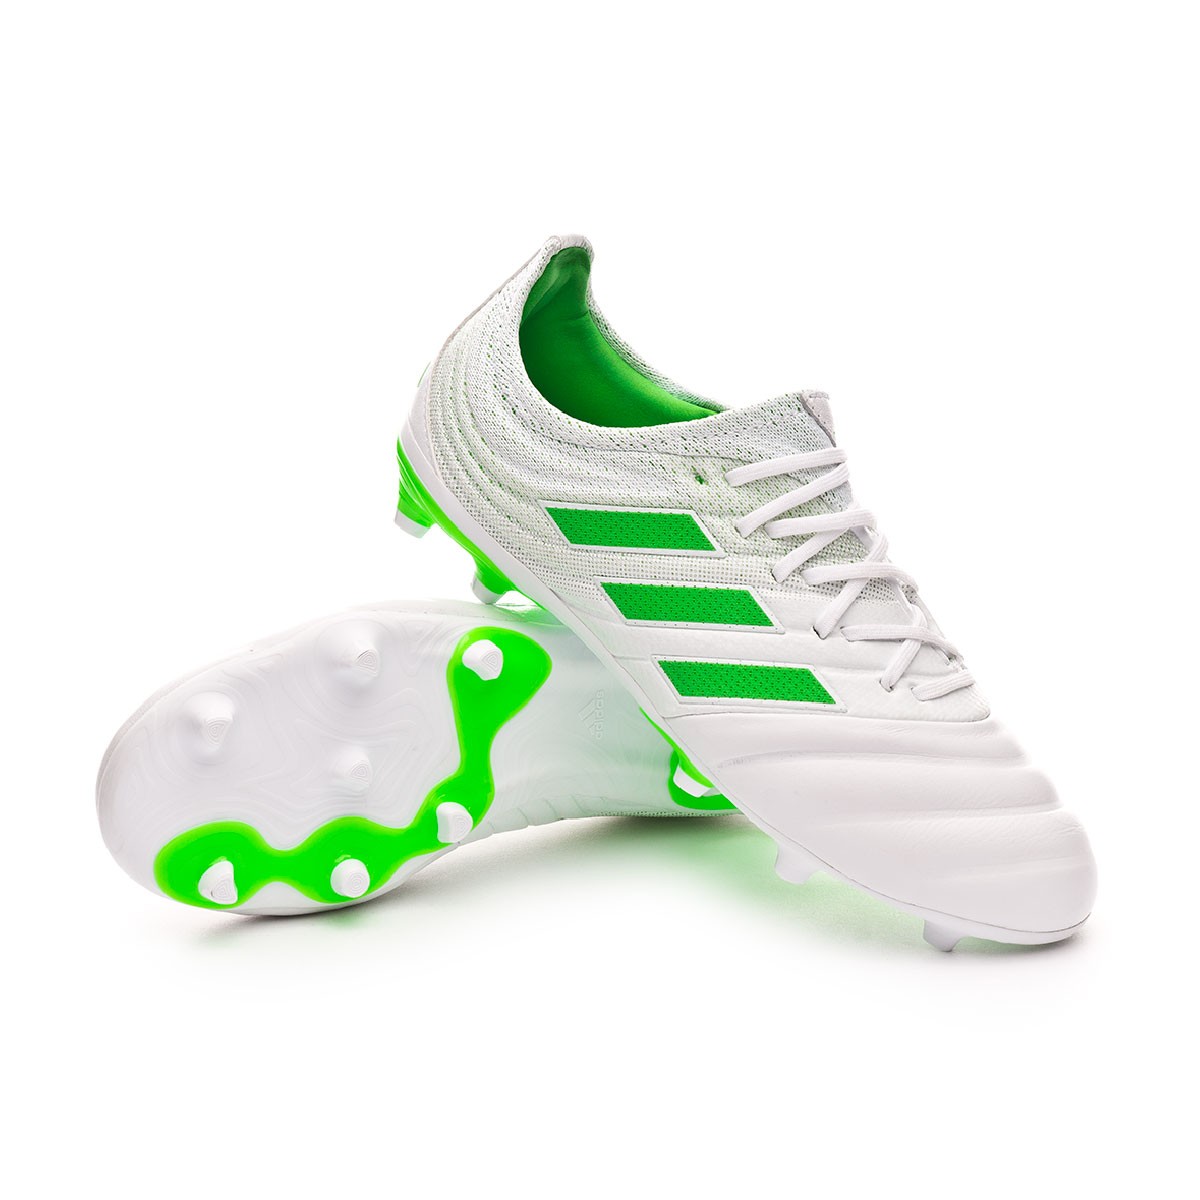 adidas lime green football boots